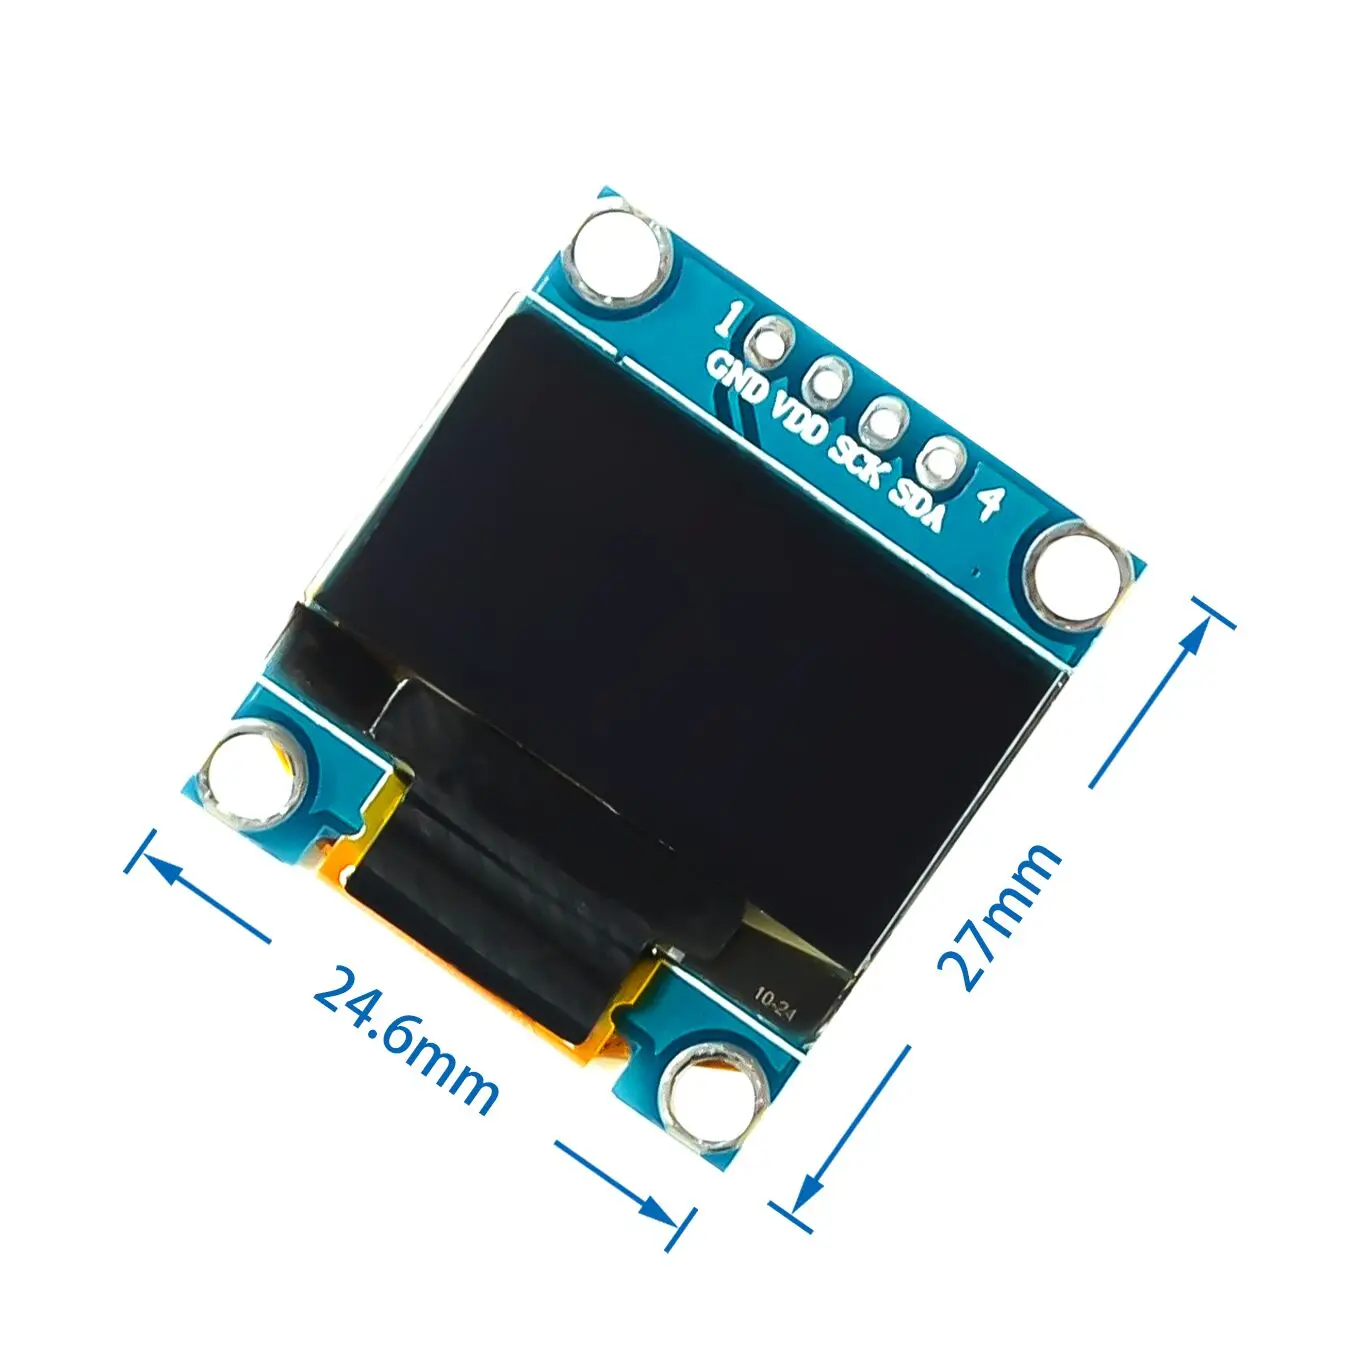 Модуль светодиодного ЖК дисплея с OLED дисплеем 0 96 91 1 3 |spi module|spi lcd moduleoled display module |